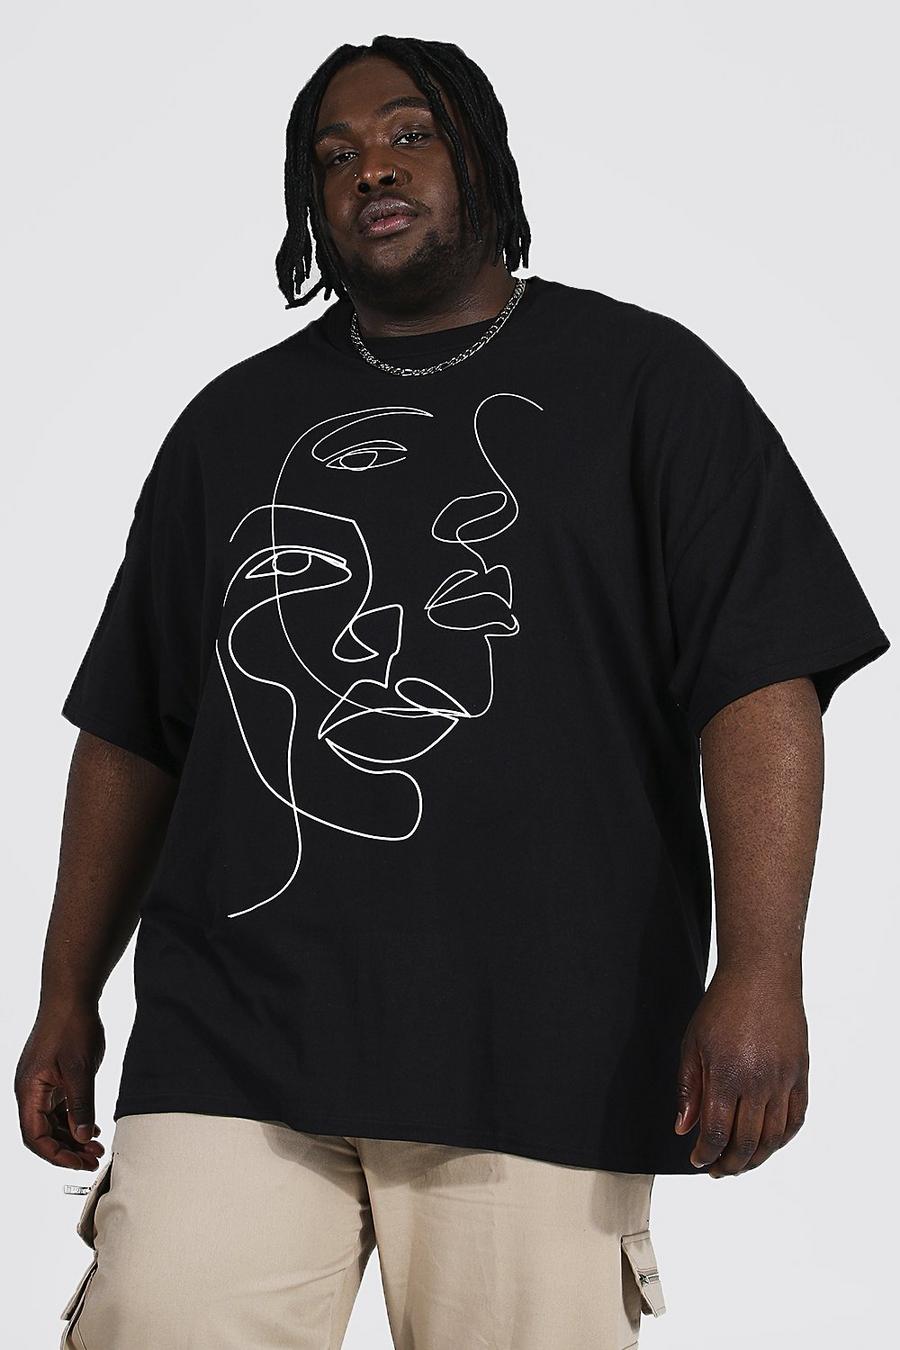 Black negro טישרט עם הדפס פנים מצוירים בקו אחד למידות גדולות